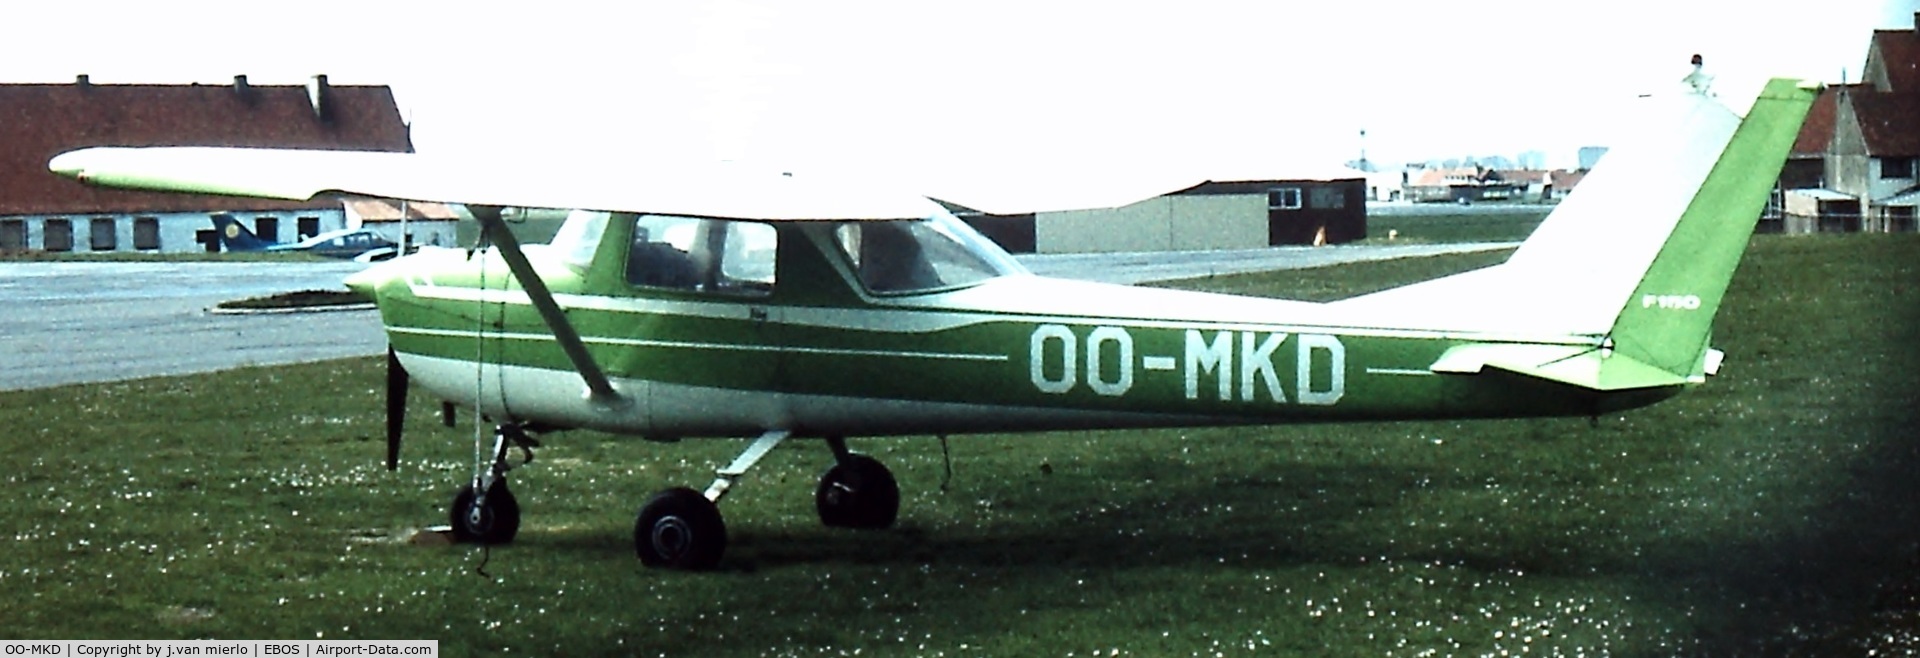 OO-MKD, 1970 Reims F150K C/N 0546, Ostend? Belgium '70s